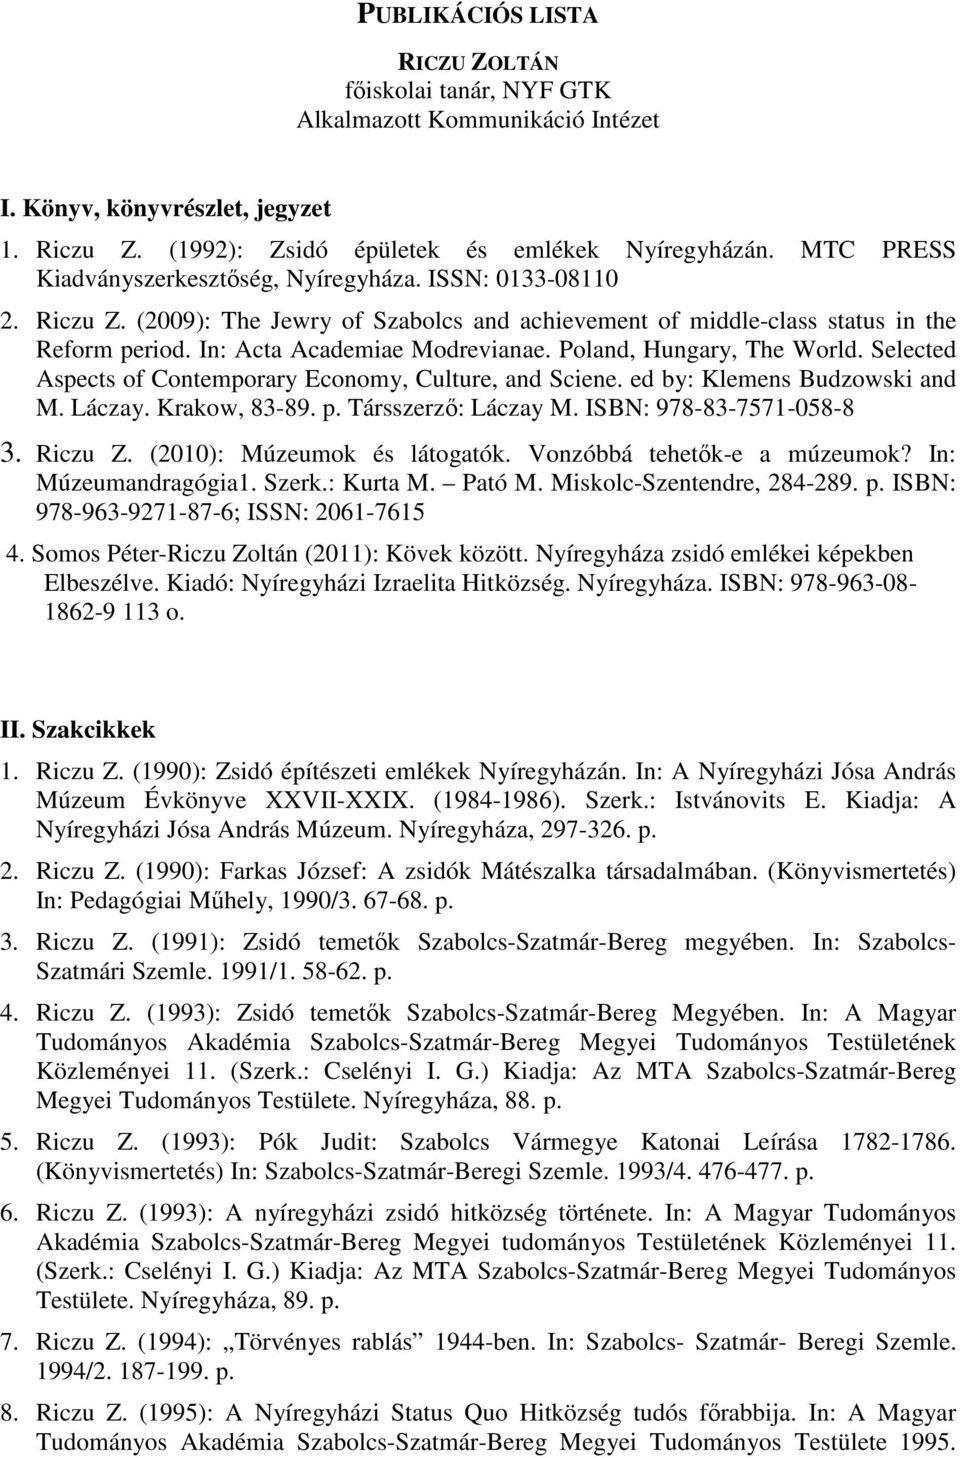 Poland, Hungary, The World. Selected Aspects of Contemporary Economy, Culture, and Sciene. ed by: Klemens Budzowski and M. Láczay. Krakow, 83-89. p. Társszerző: Láczay M. ISBN: 978-83-7571-058-8 3.